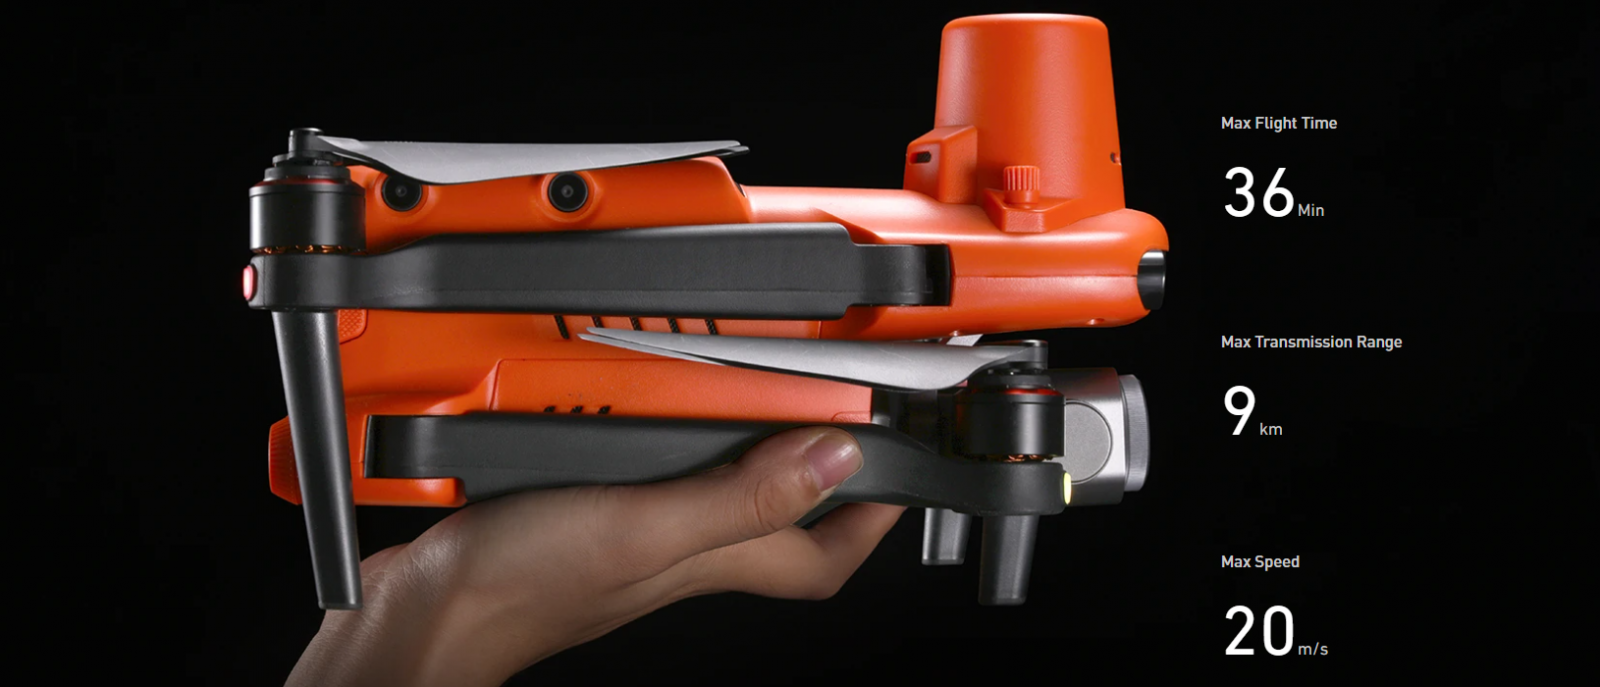 Autel Evo 2 Pro RTK Drone Rugged Bundle